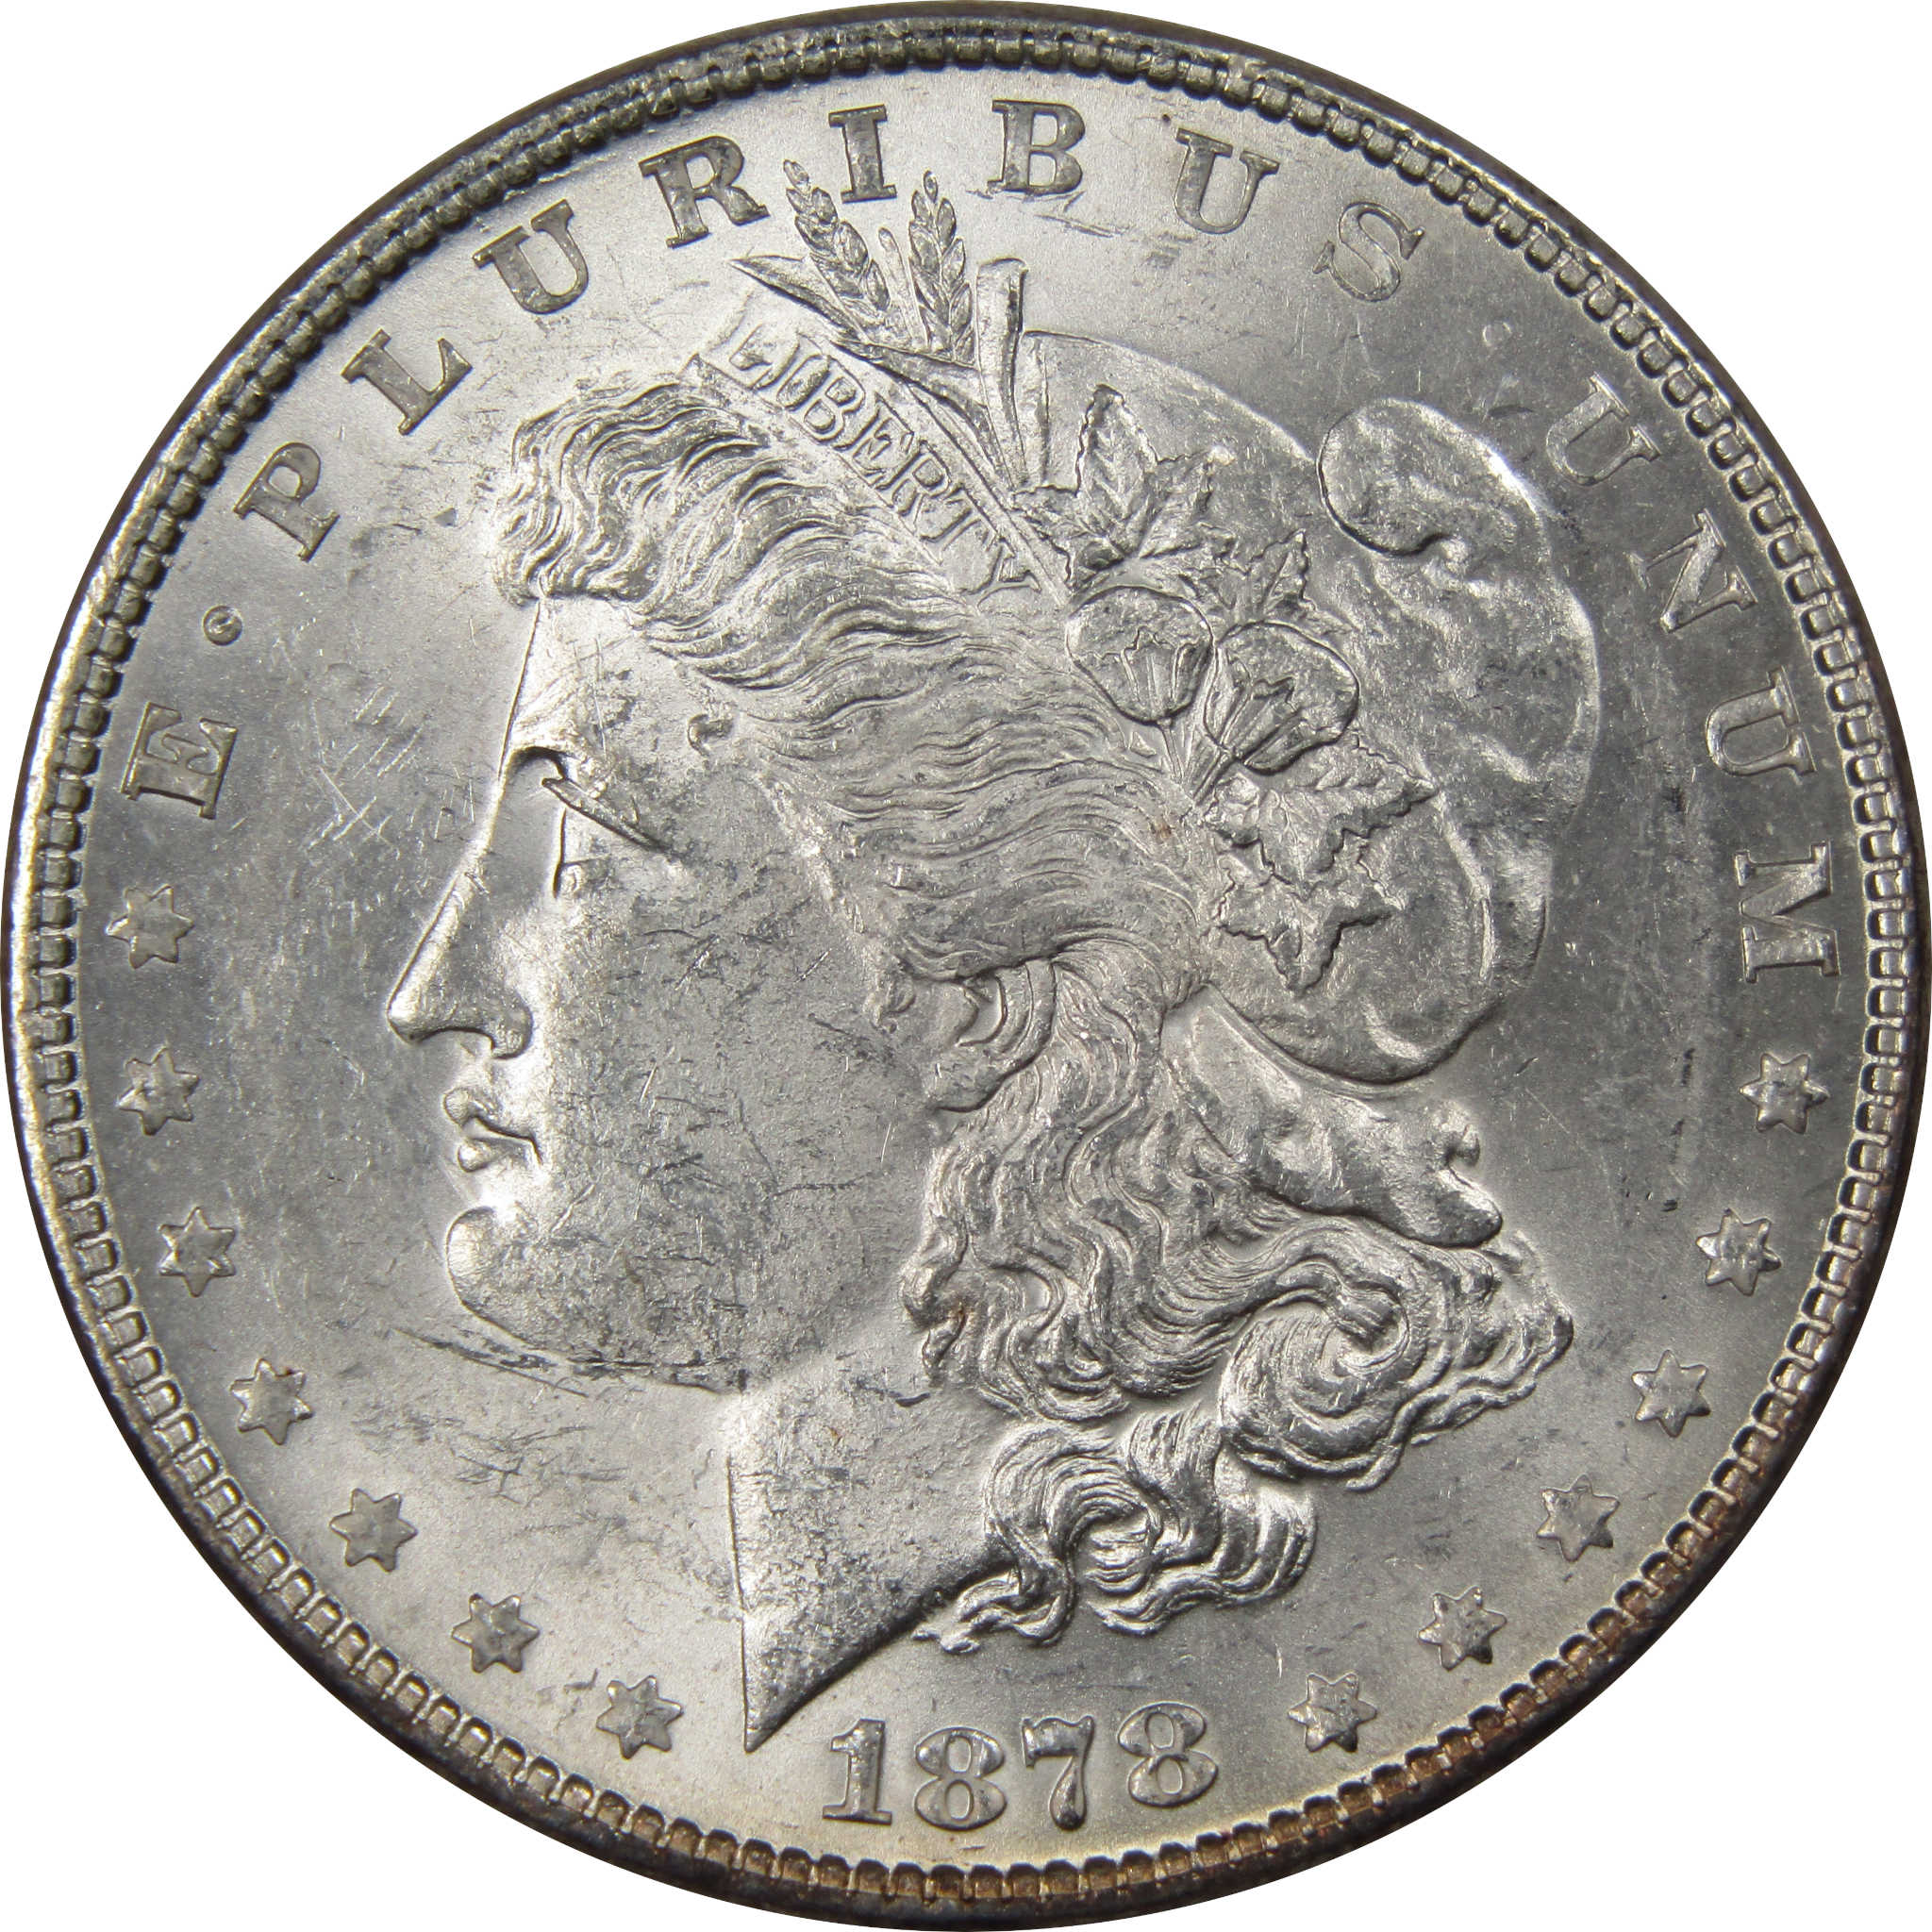 1878 7TF Rev 78 Morgan Dollar CHAU Choice About Uncirculated SKU:I1878 - Morgan coin - Morgan silver dollar - Morgan silver dollar for sale - Profile Coins &amp; Collectibles